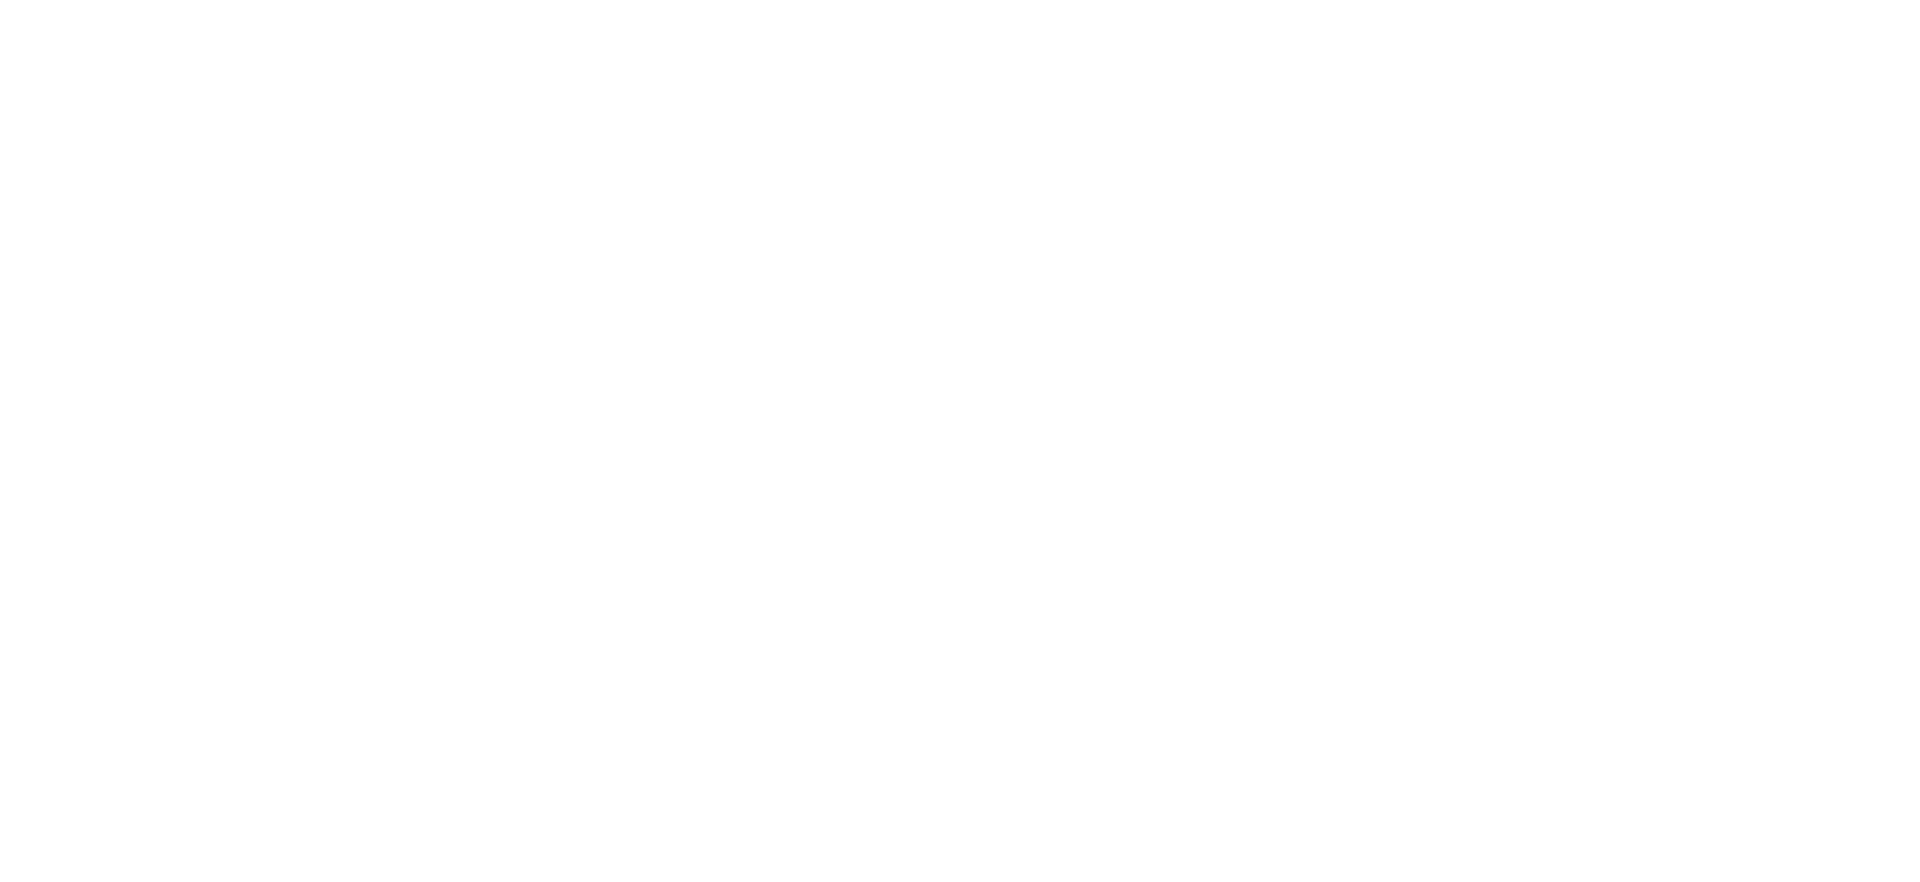 Disney Family Sundays logo